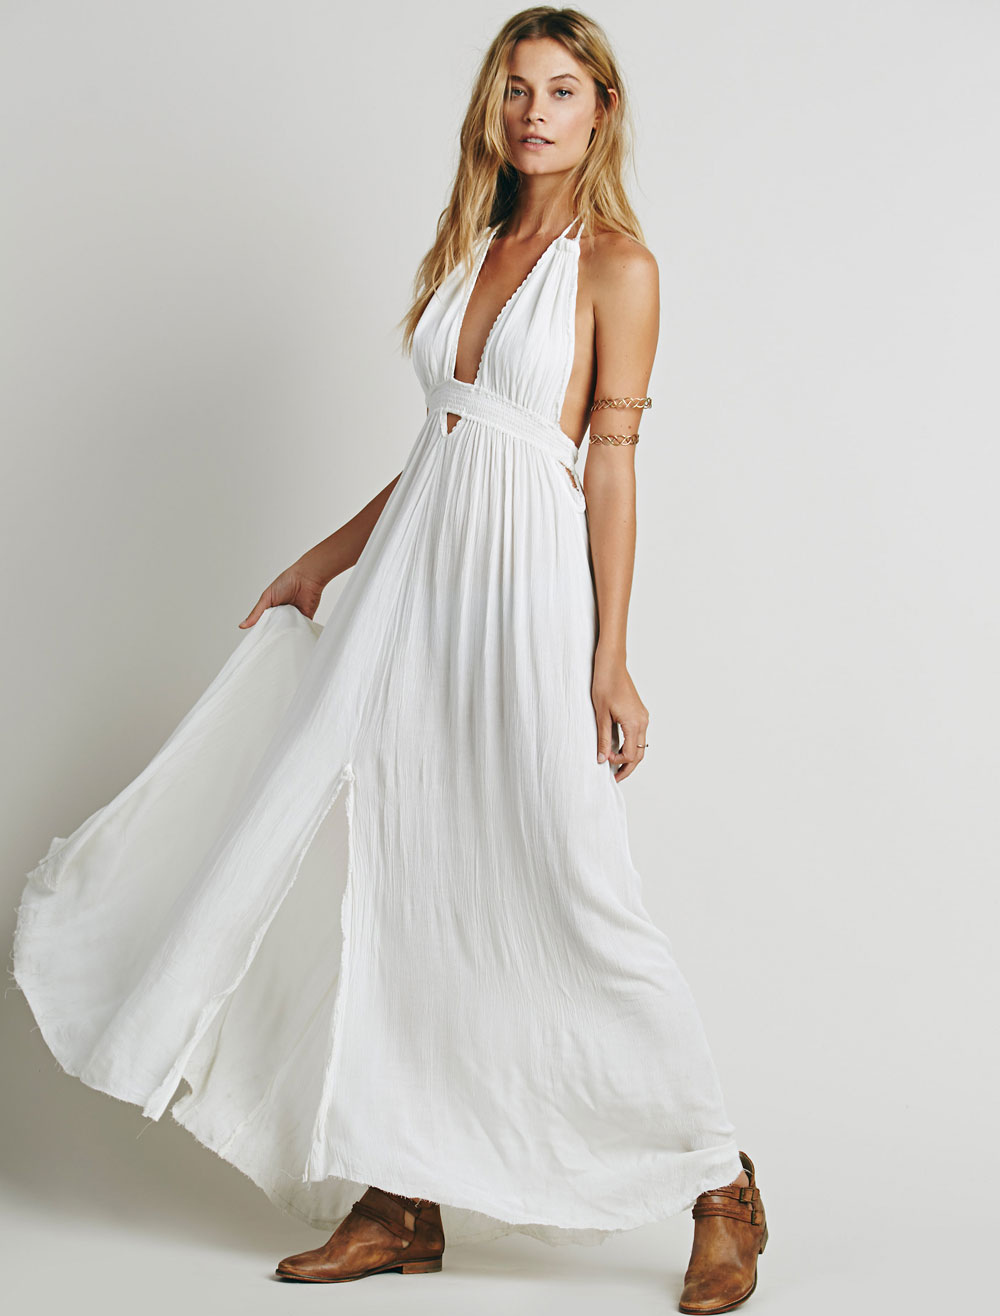 White Long Dress Halter V Neck Sleeveless Backless Maxi Dress With Fringe (Women\\'s Clothing Maxi Dresses) photo